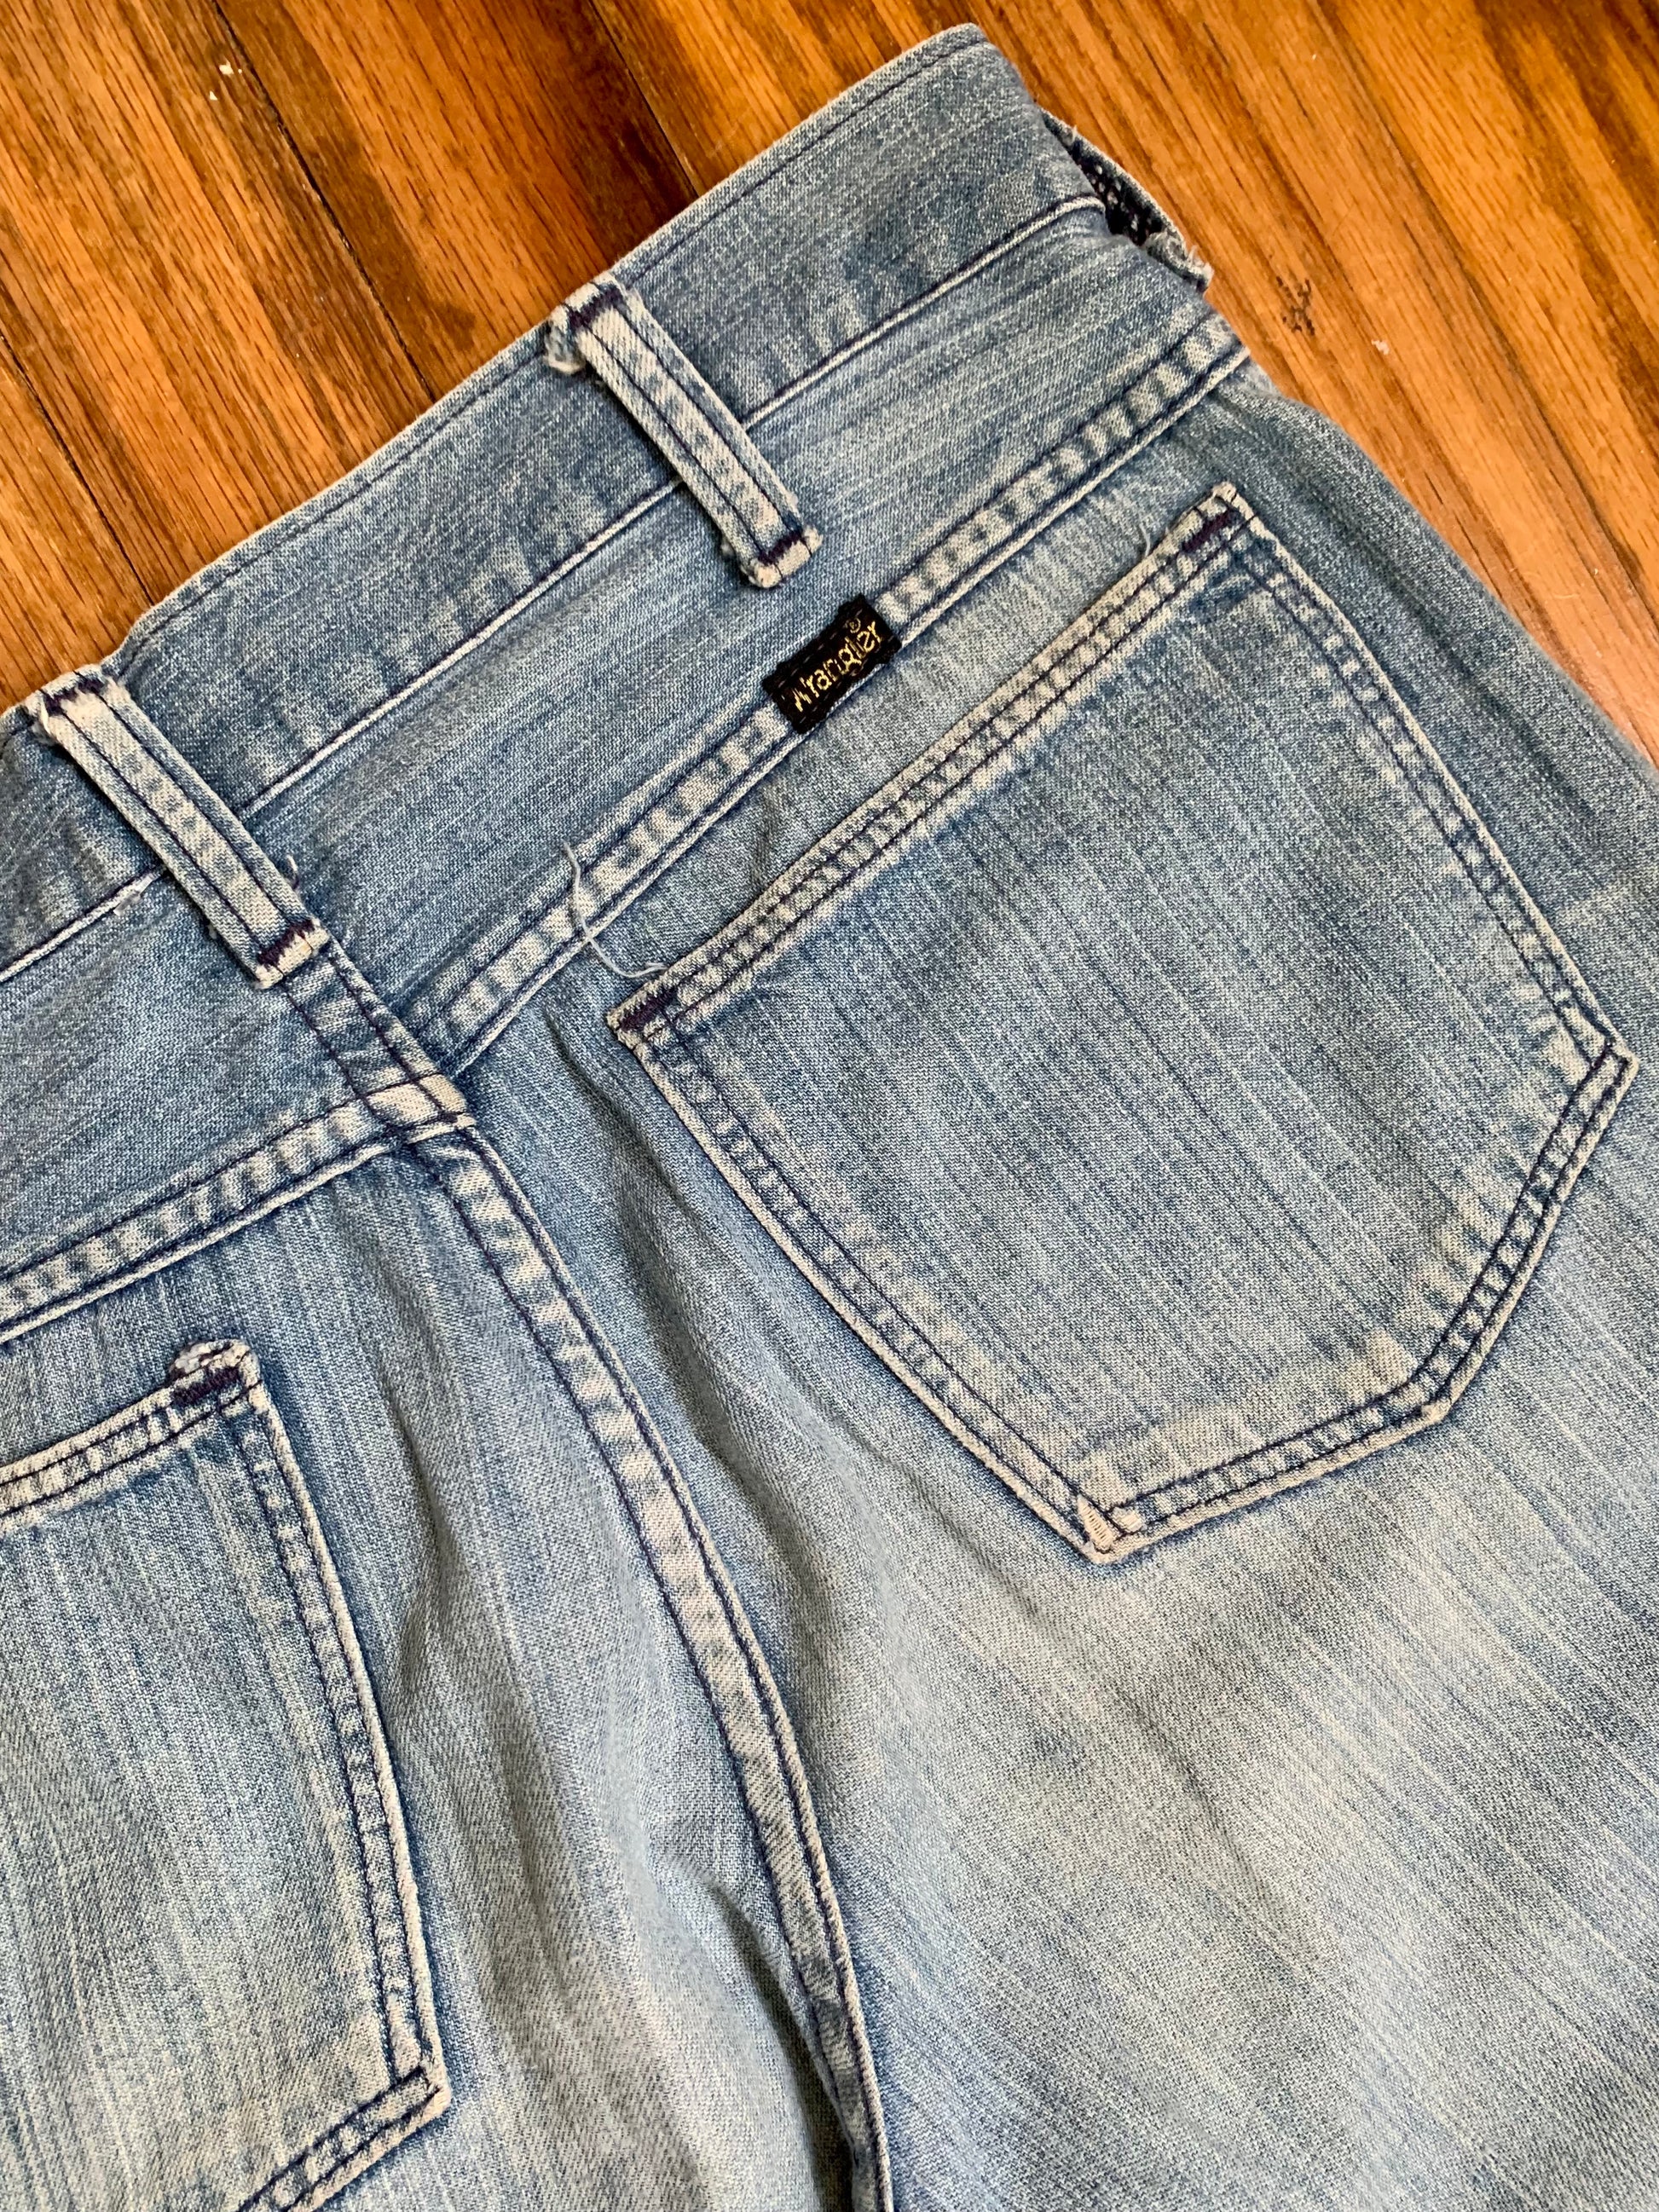 Soft Worn Vintage Wrangler Jeans 30x29 (women's 6/8) – High Class Hillbilly